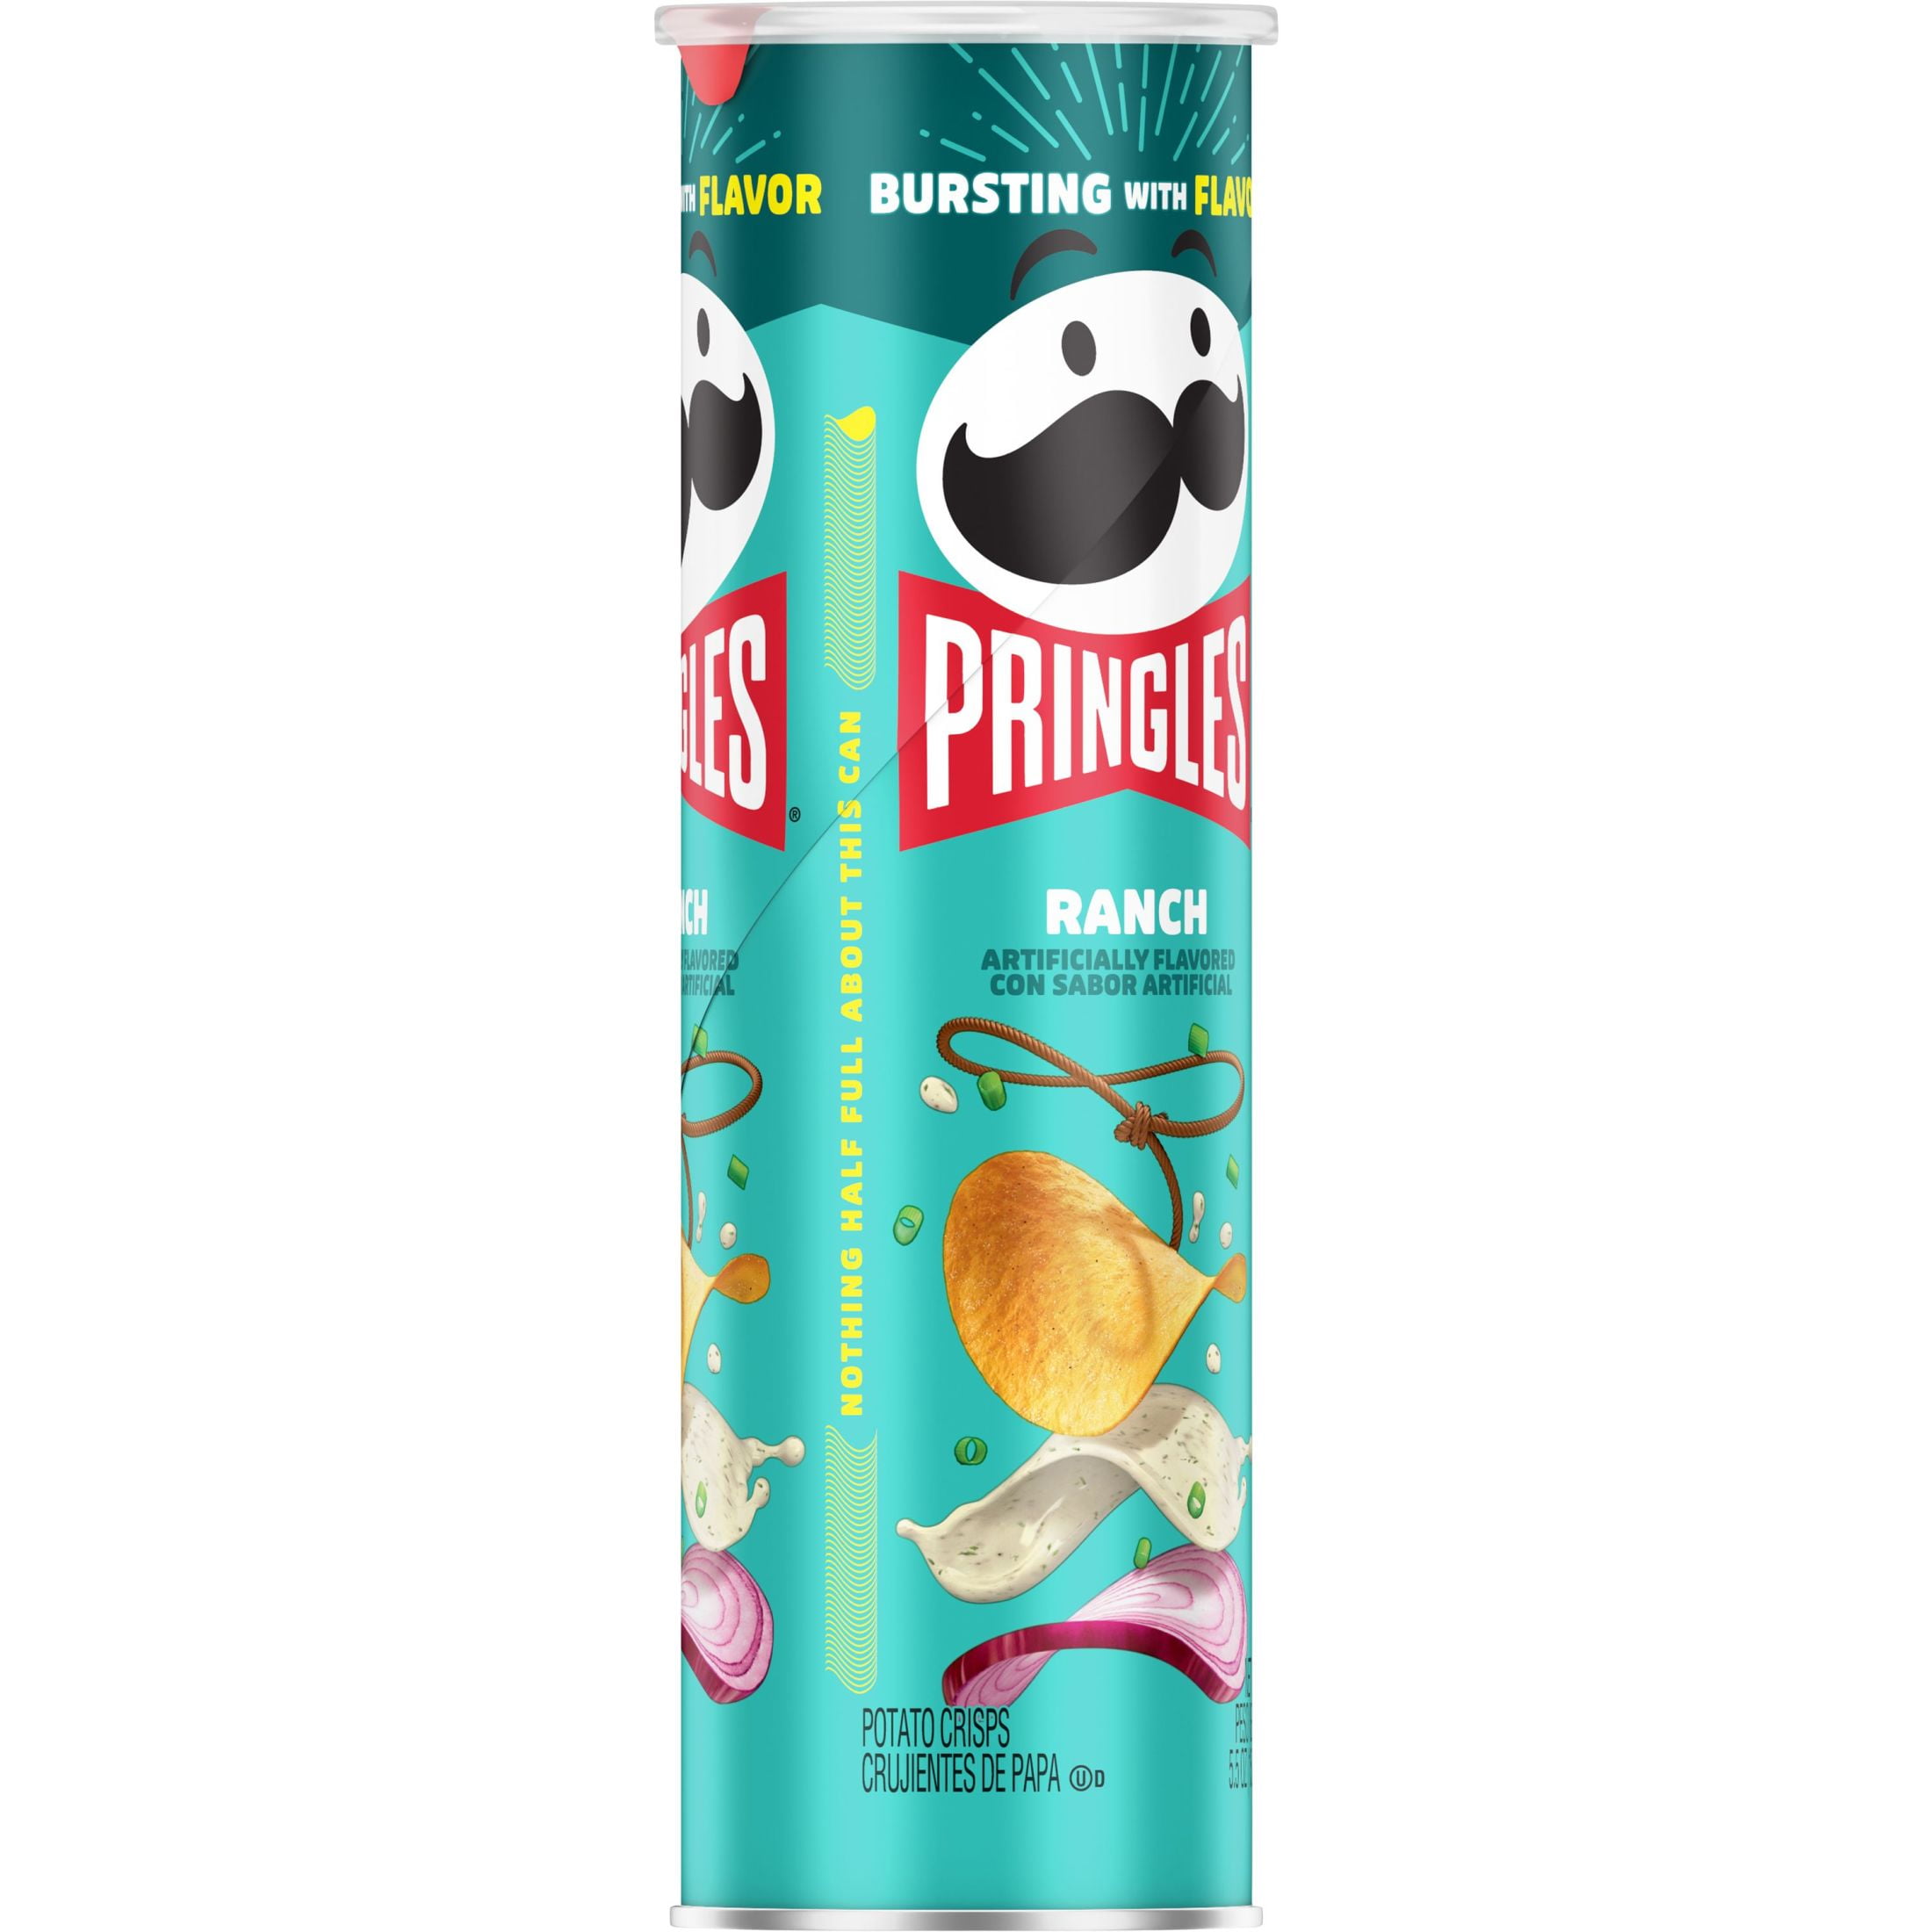 Buy Pringles Ranch Potato Crisps Chips, 5.5 oz Online at Lowest Price ...